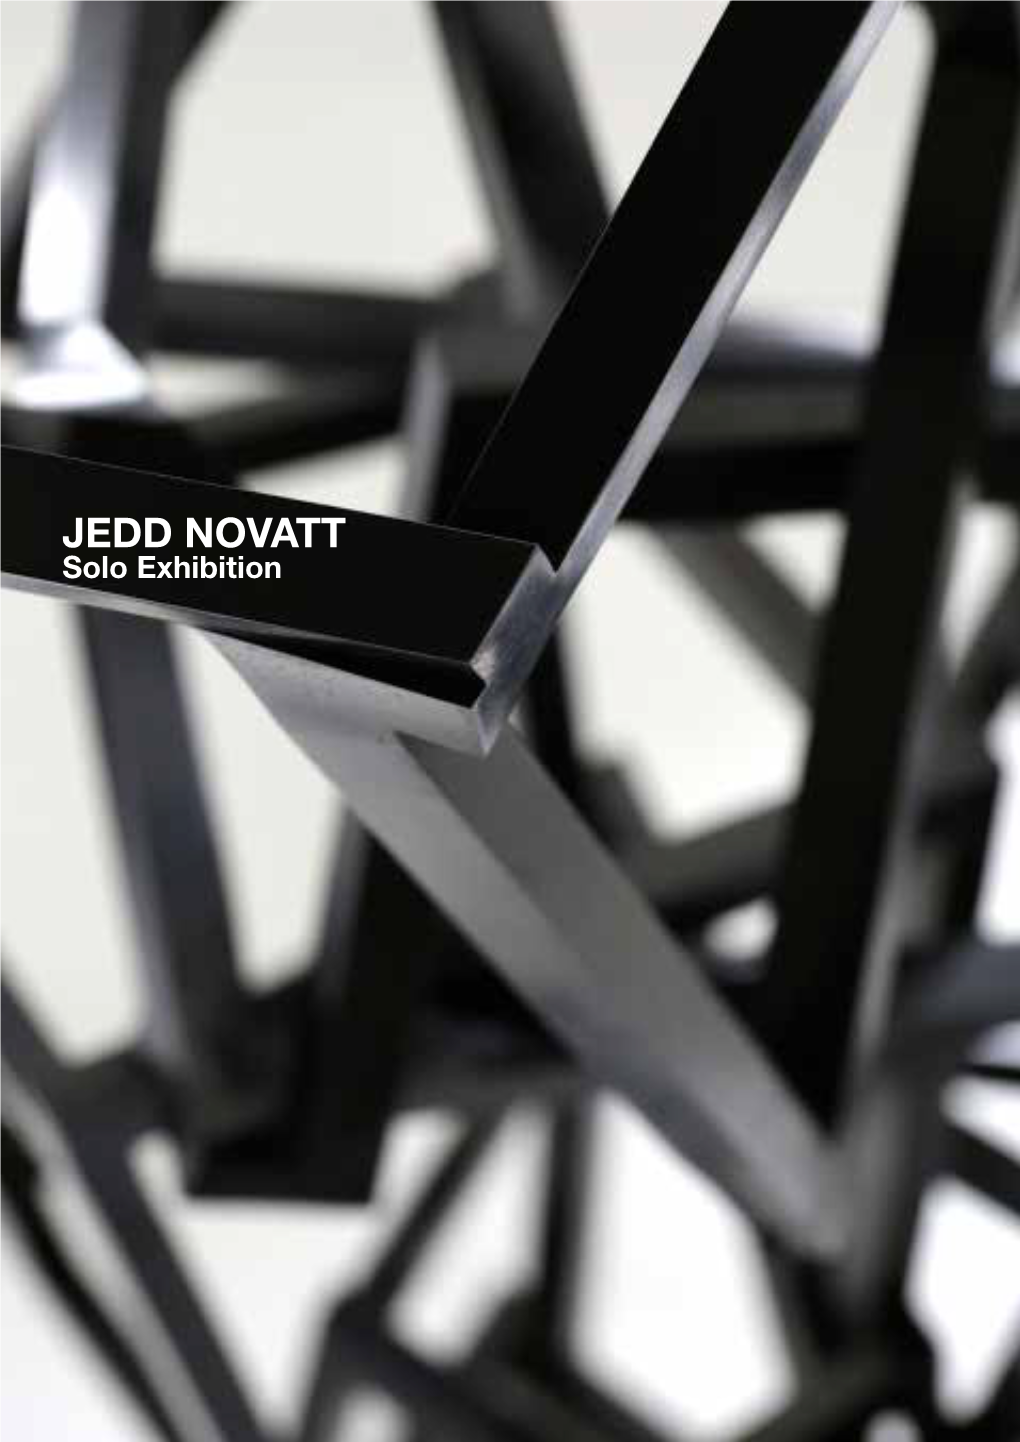 JEDD NOVATT Solo Exhibition Contents Introduction